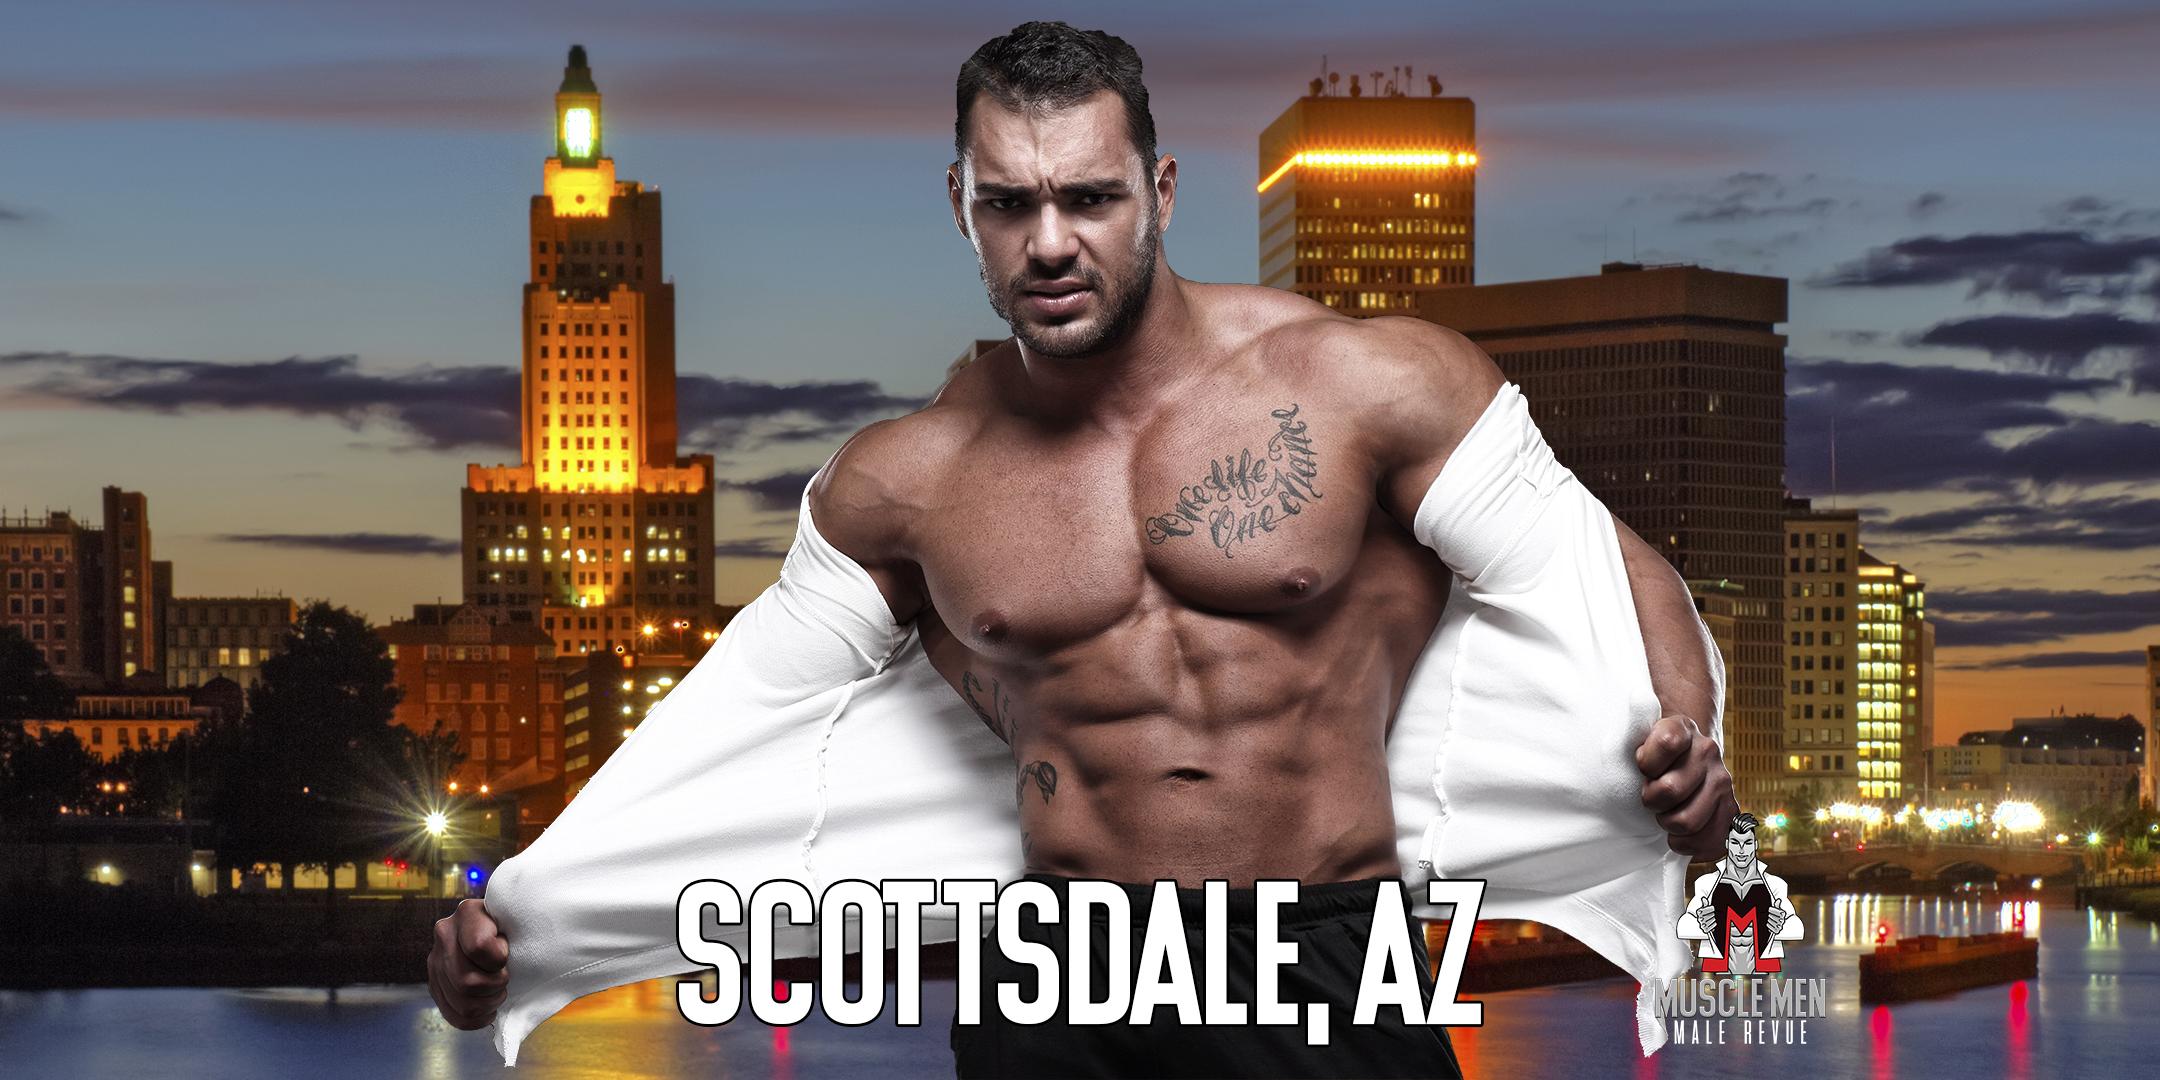 Muscle Men Male Strippers Revue & Male Strip Club Shows Scottsdale, AZ 8 PM-9:30 PM